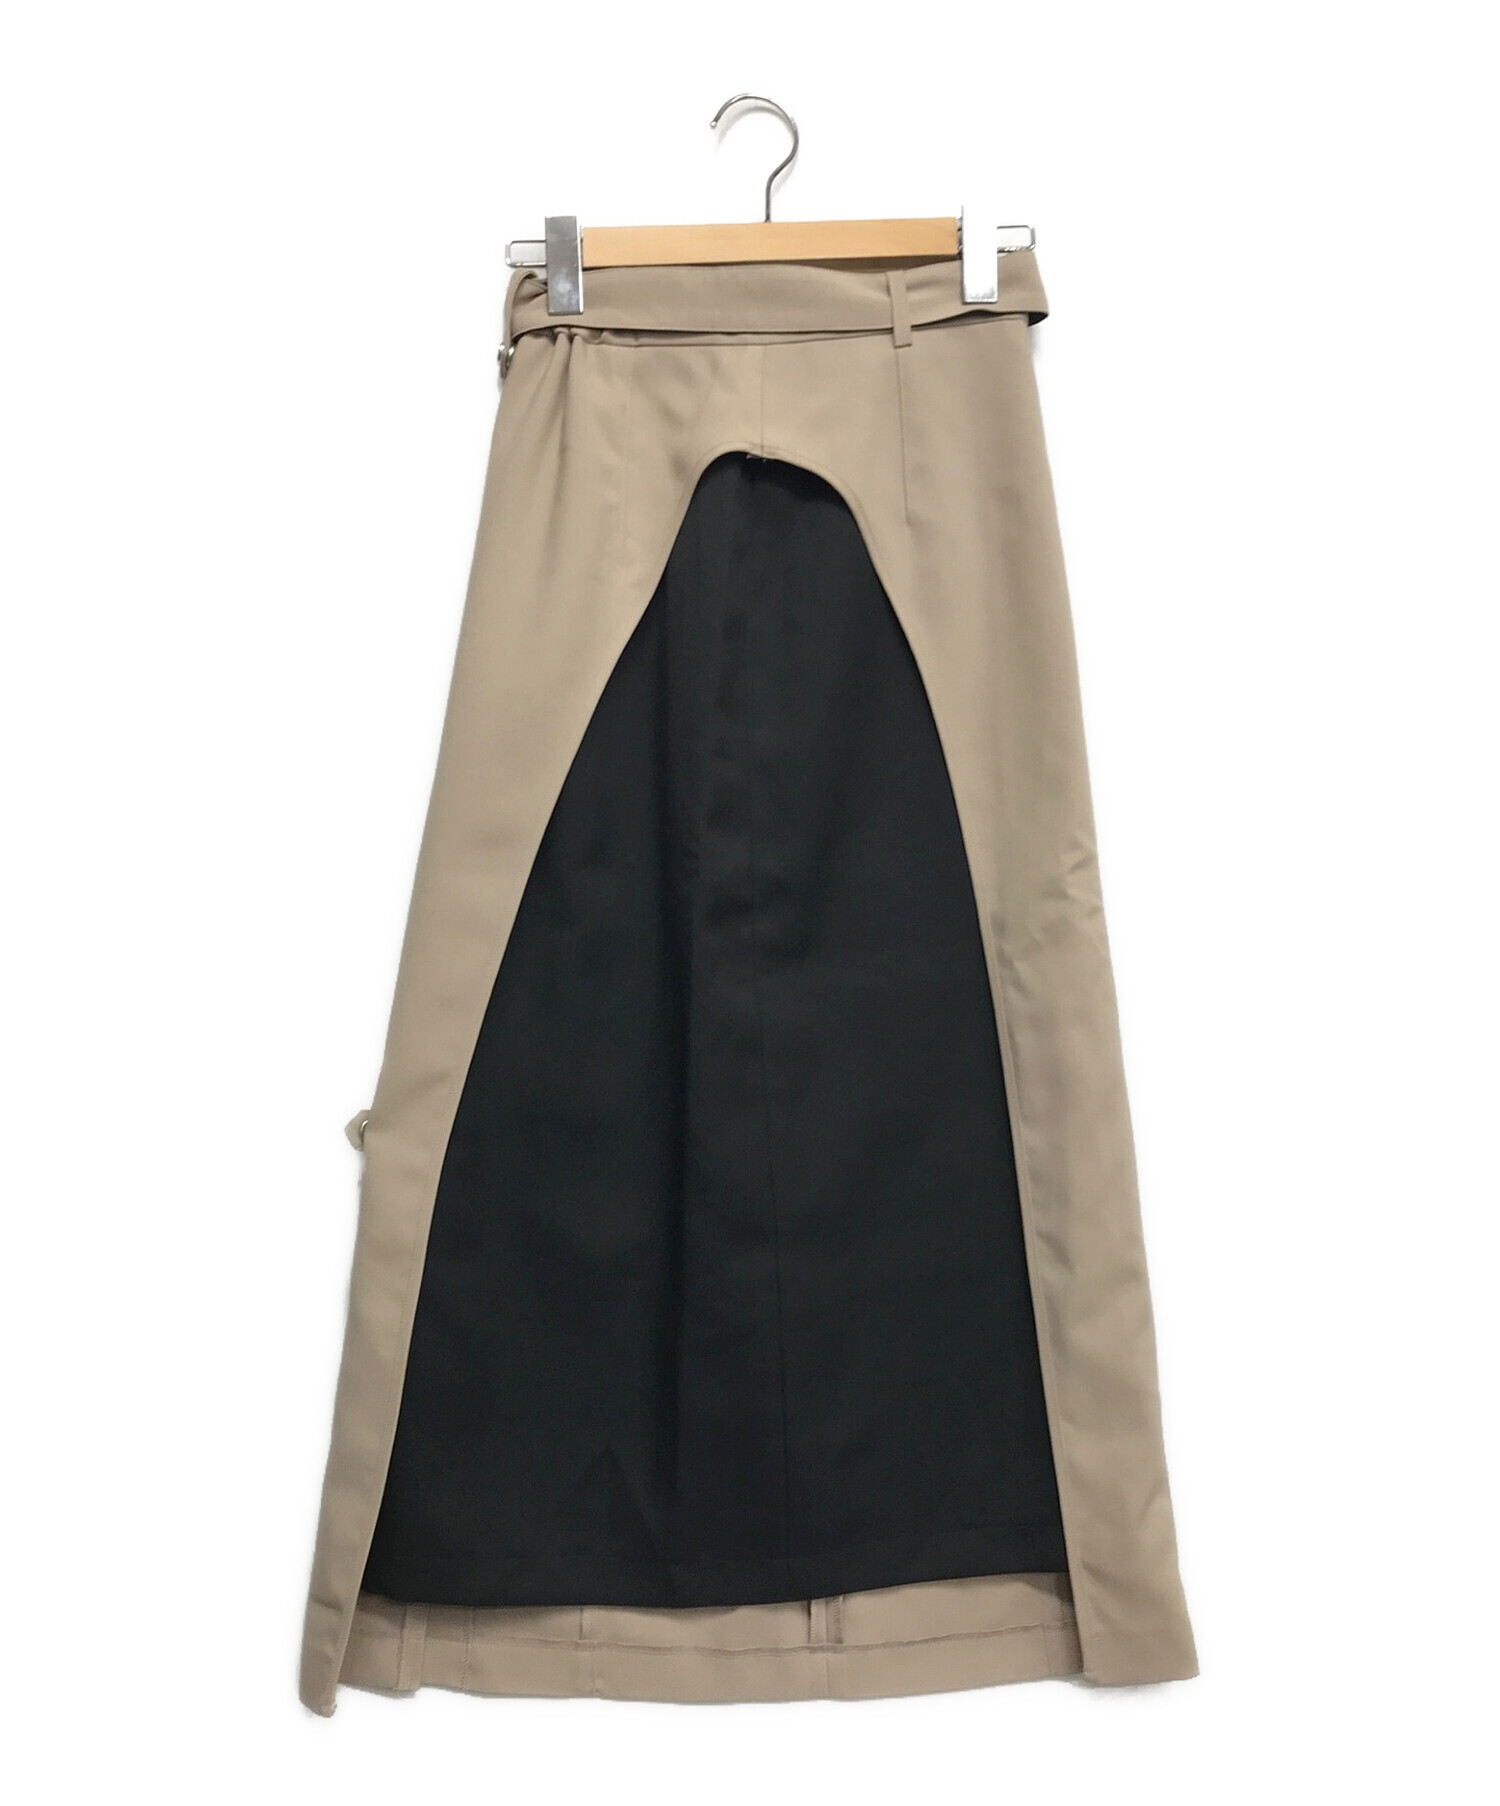 UNITED TOKYO (ユナイテッドトーキョー) クロックコンビタイトスカート ベージュ×ブラック サイズ:1